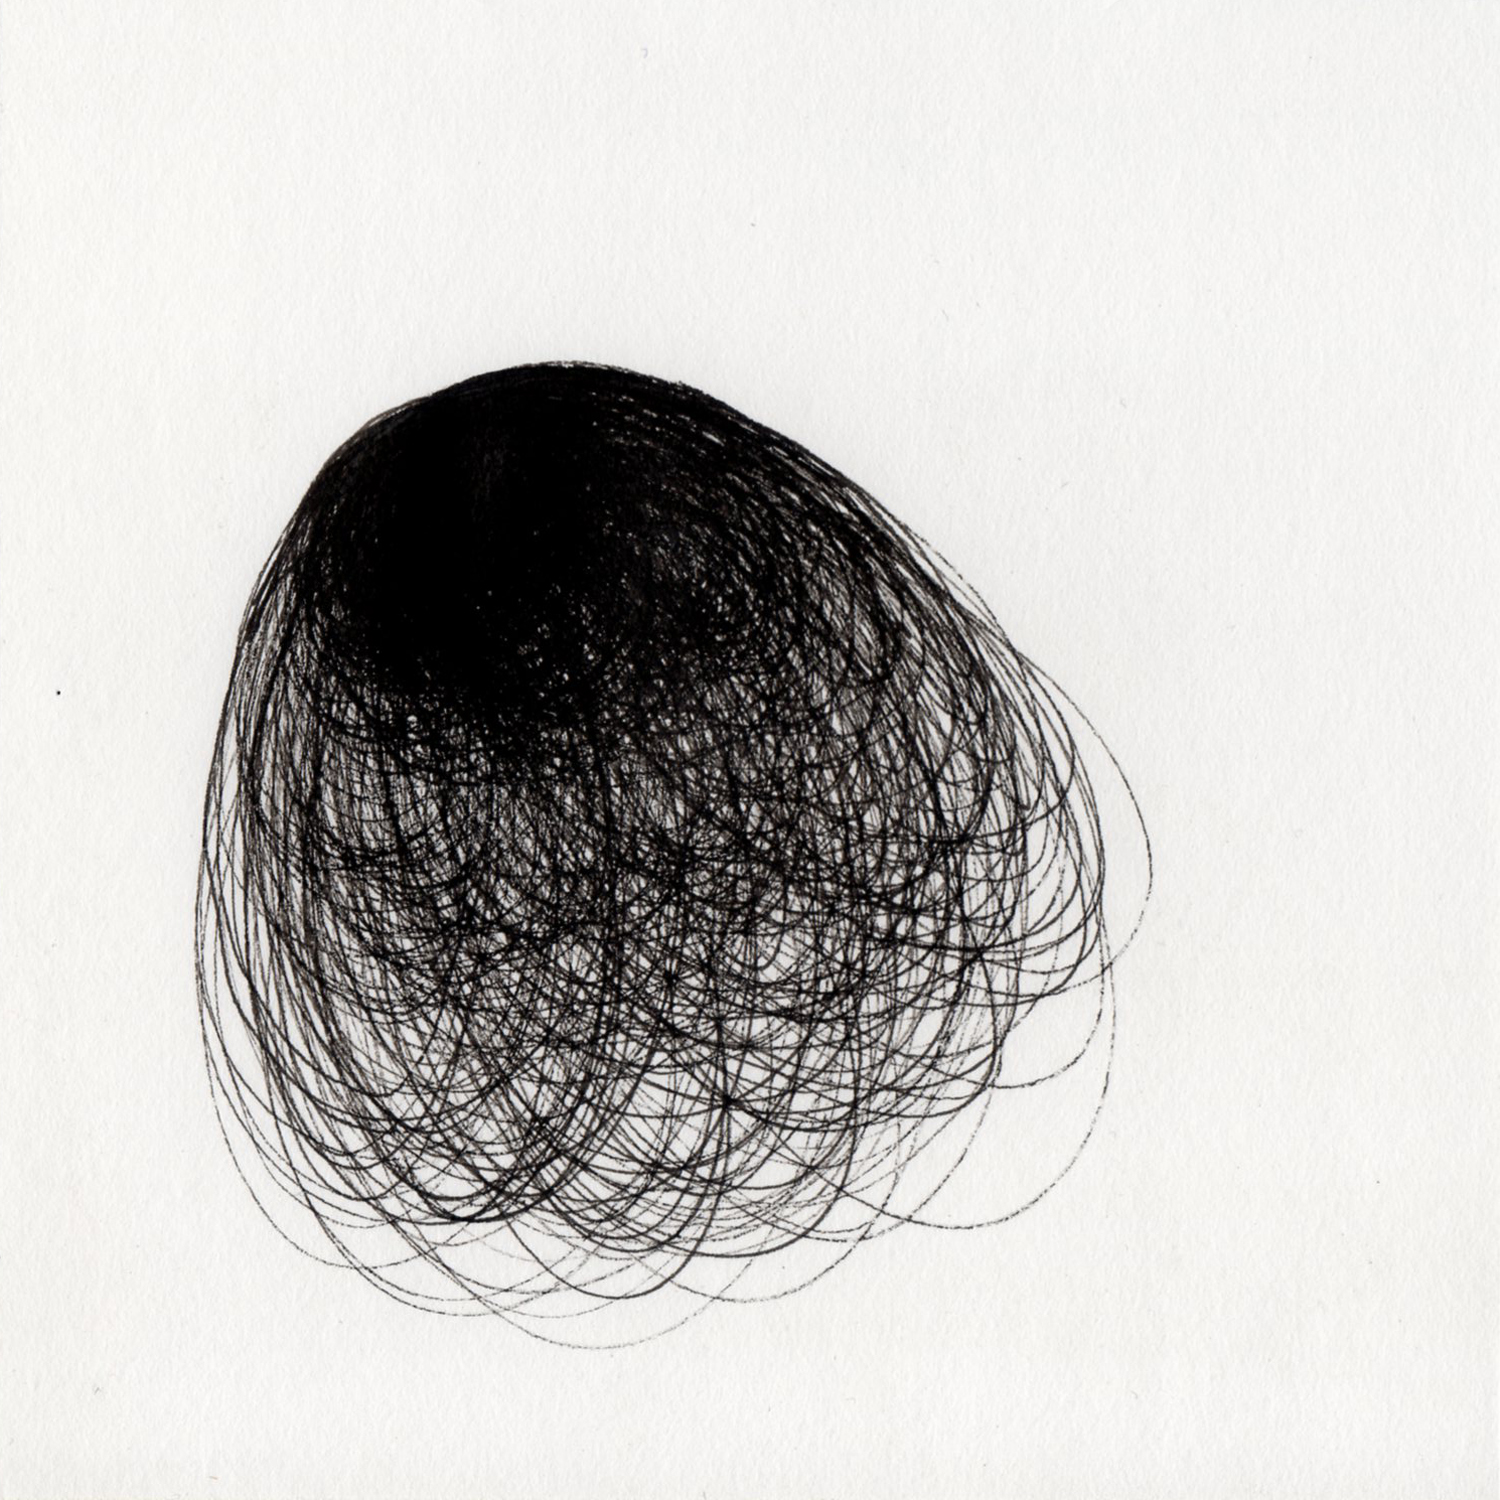   blob 9  pen on paper 5” x 5” 2014 